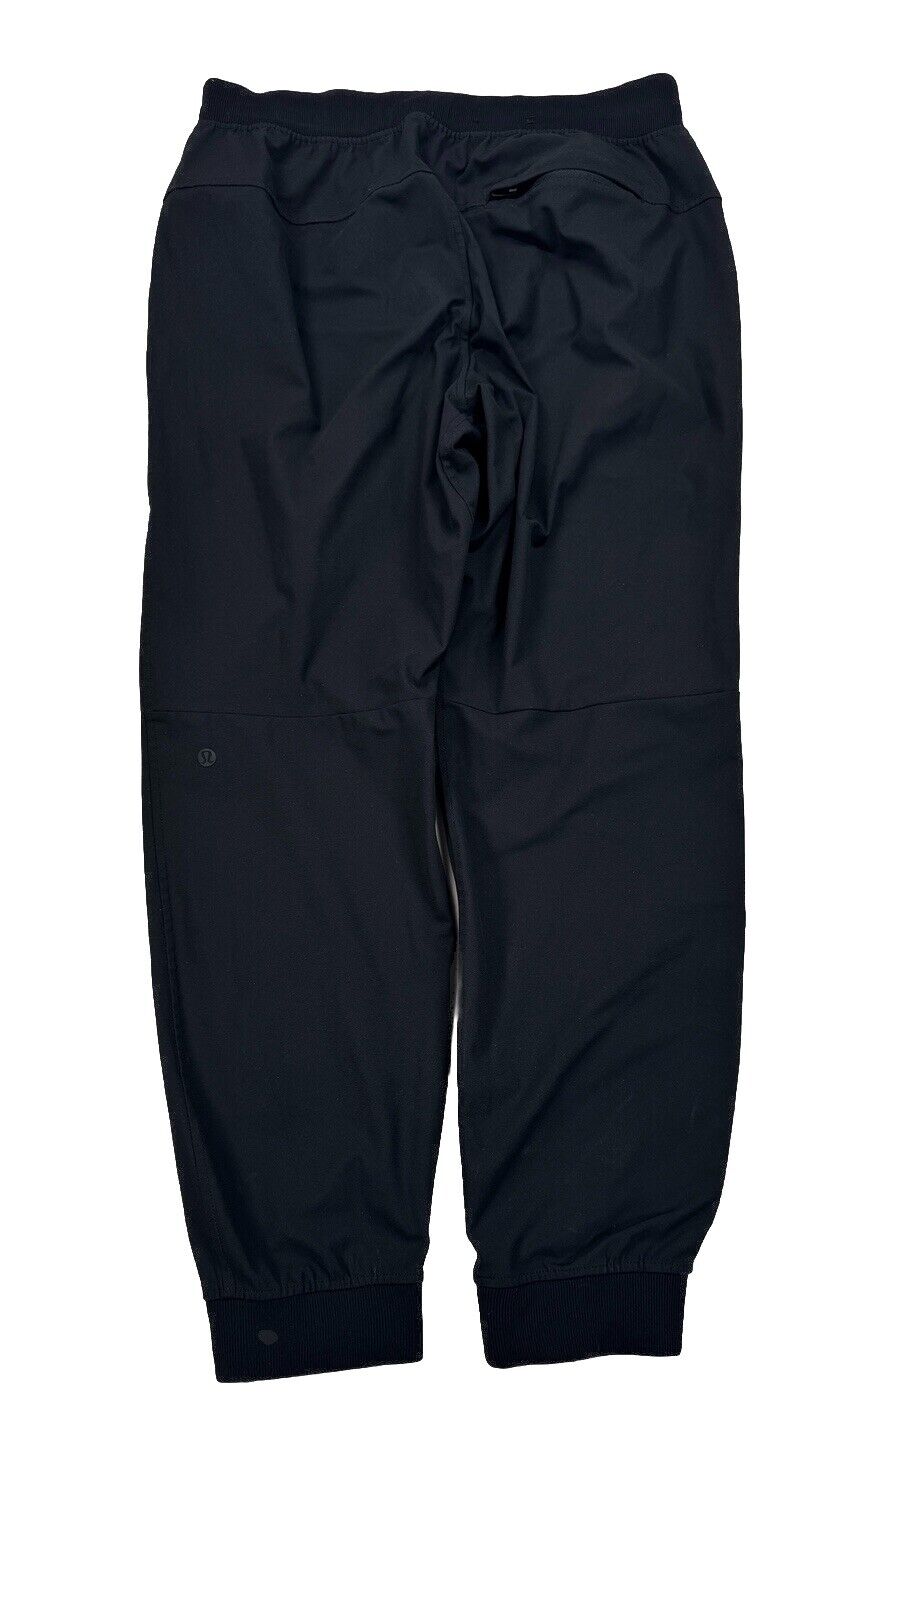 Lululemon Men's Black ABC Jogger Short Length Pants - L